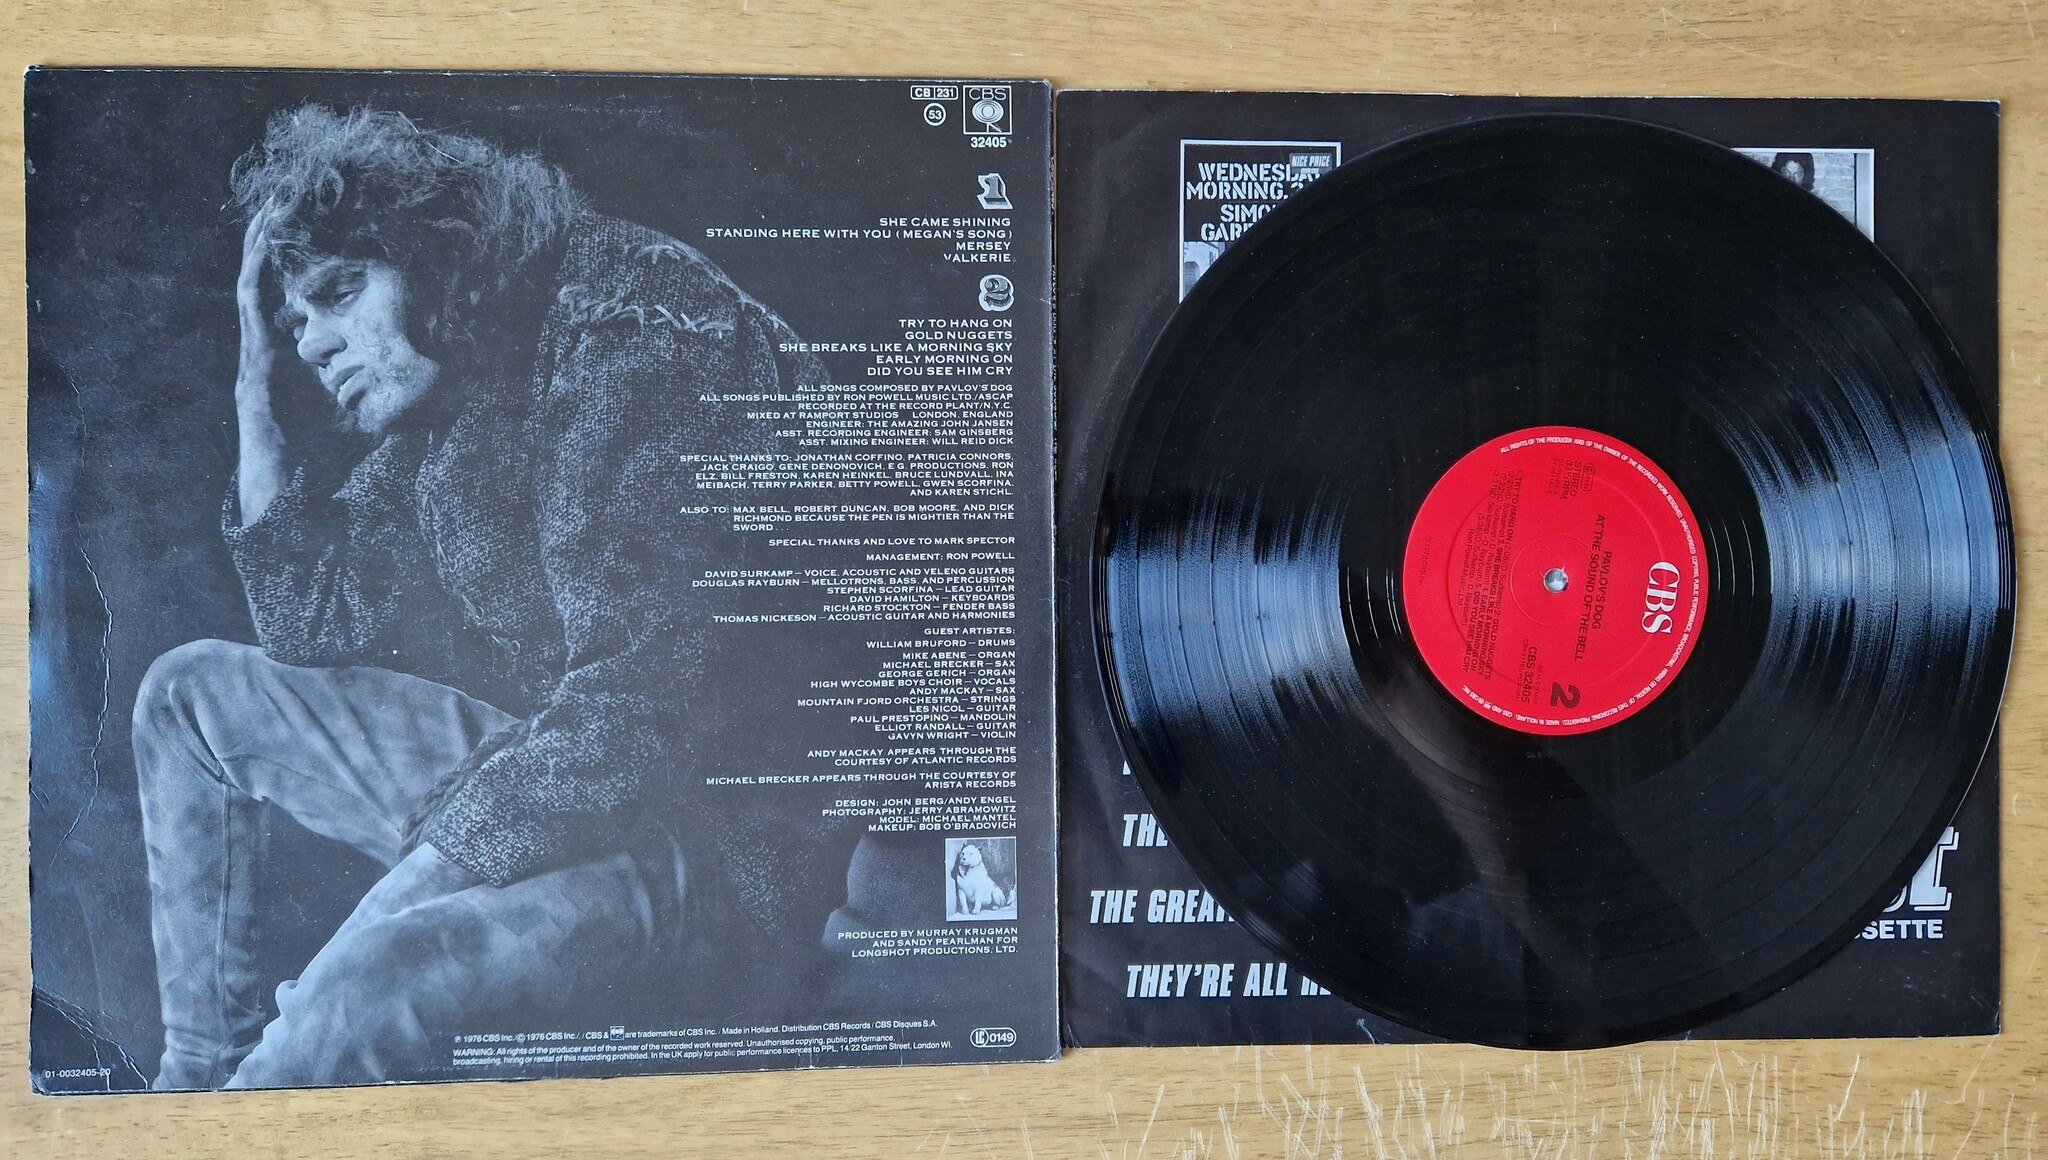 Pavlovs Dog, At the sound of the bell. Vinyl LP